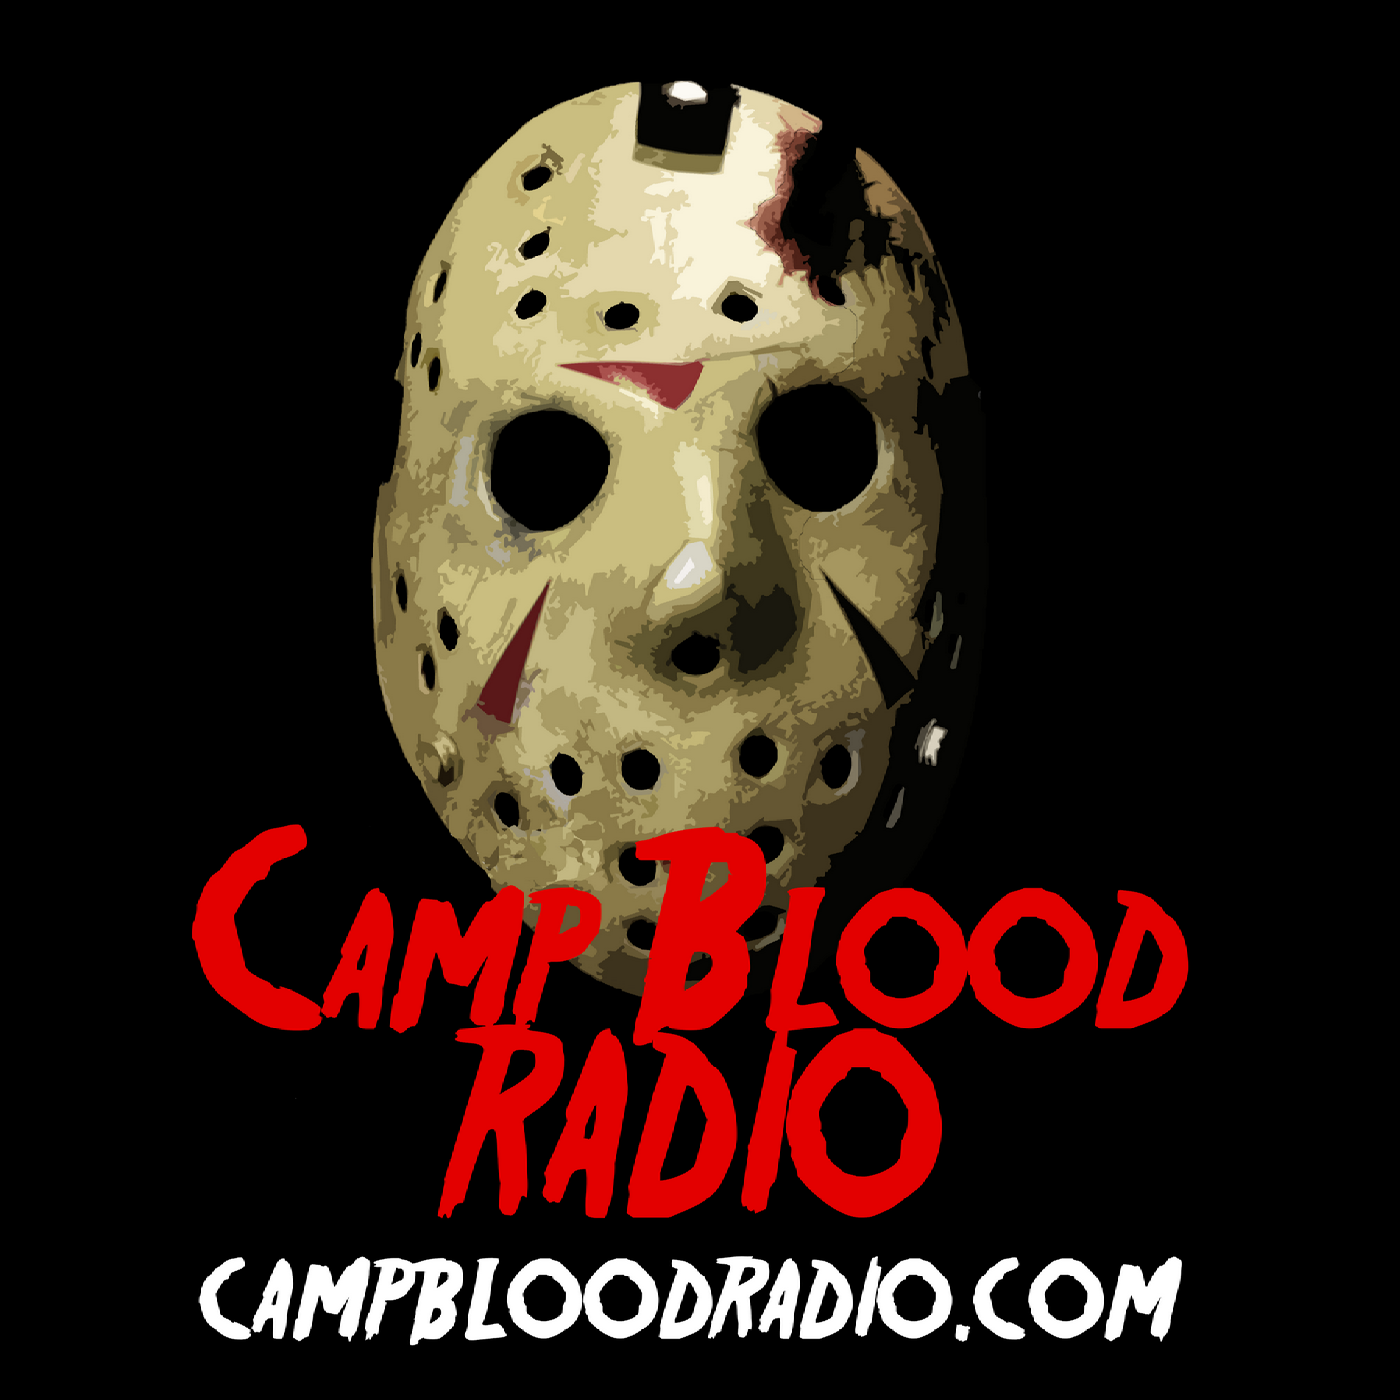 Camp Blood Radio